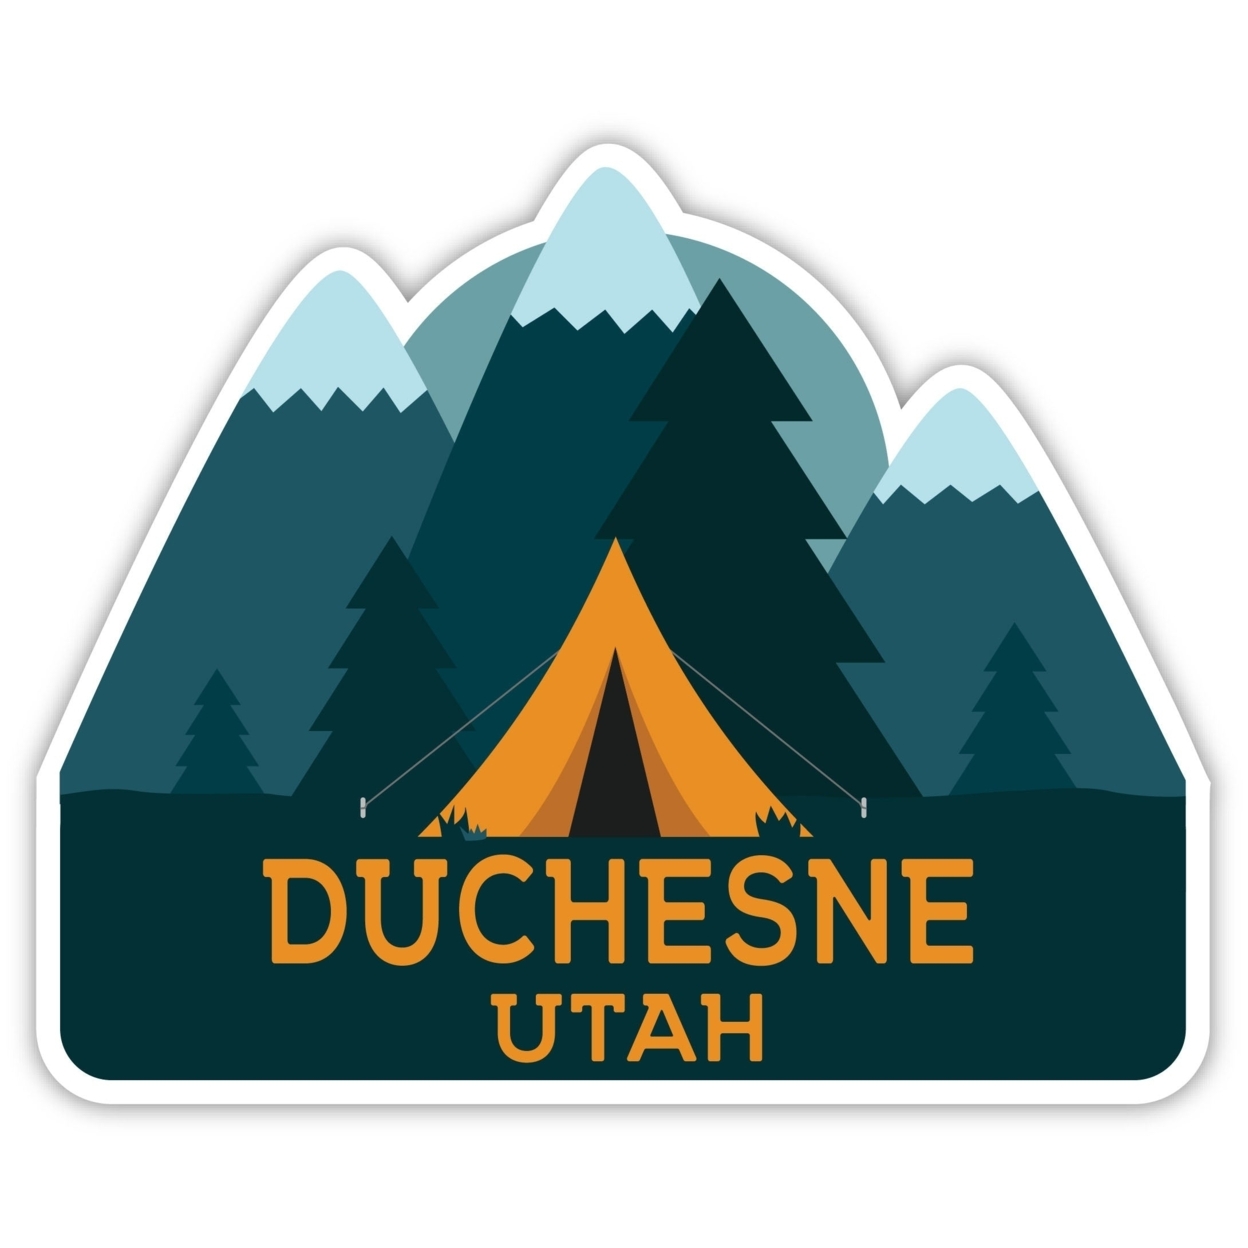 Duchesne Utah Souvenir Decorative Stickers (Choose Theme And Size) - 4-Pack, 10-Inch, Tent